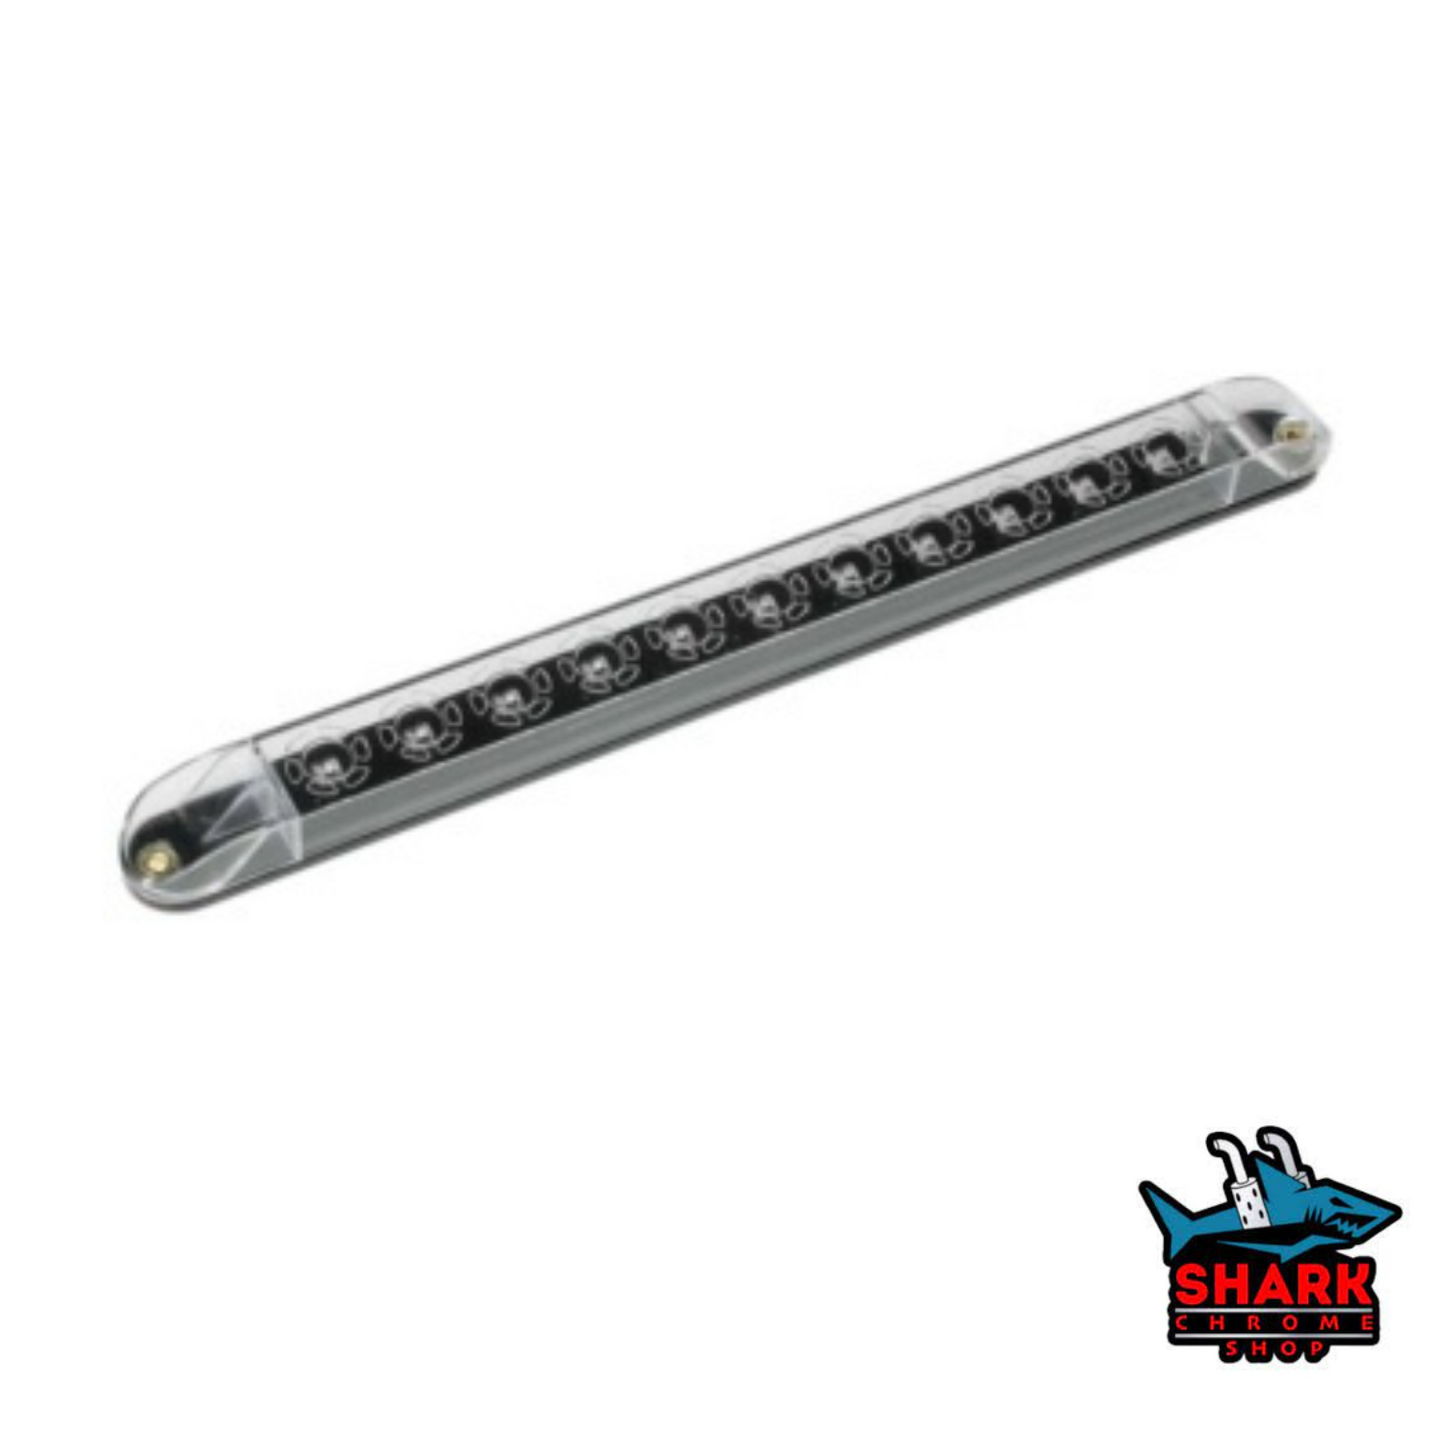 LED Sealed Light Bar